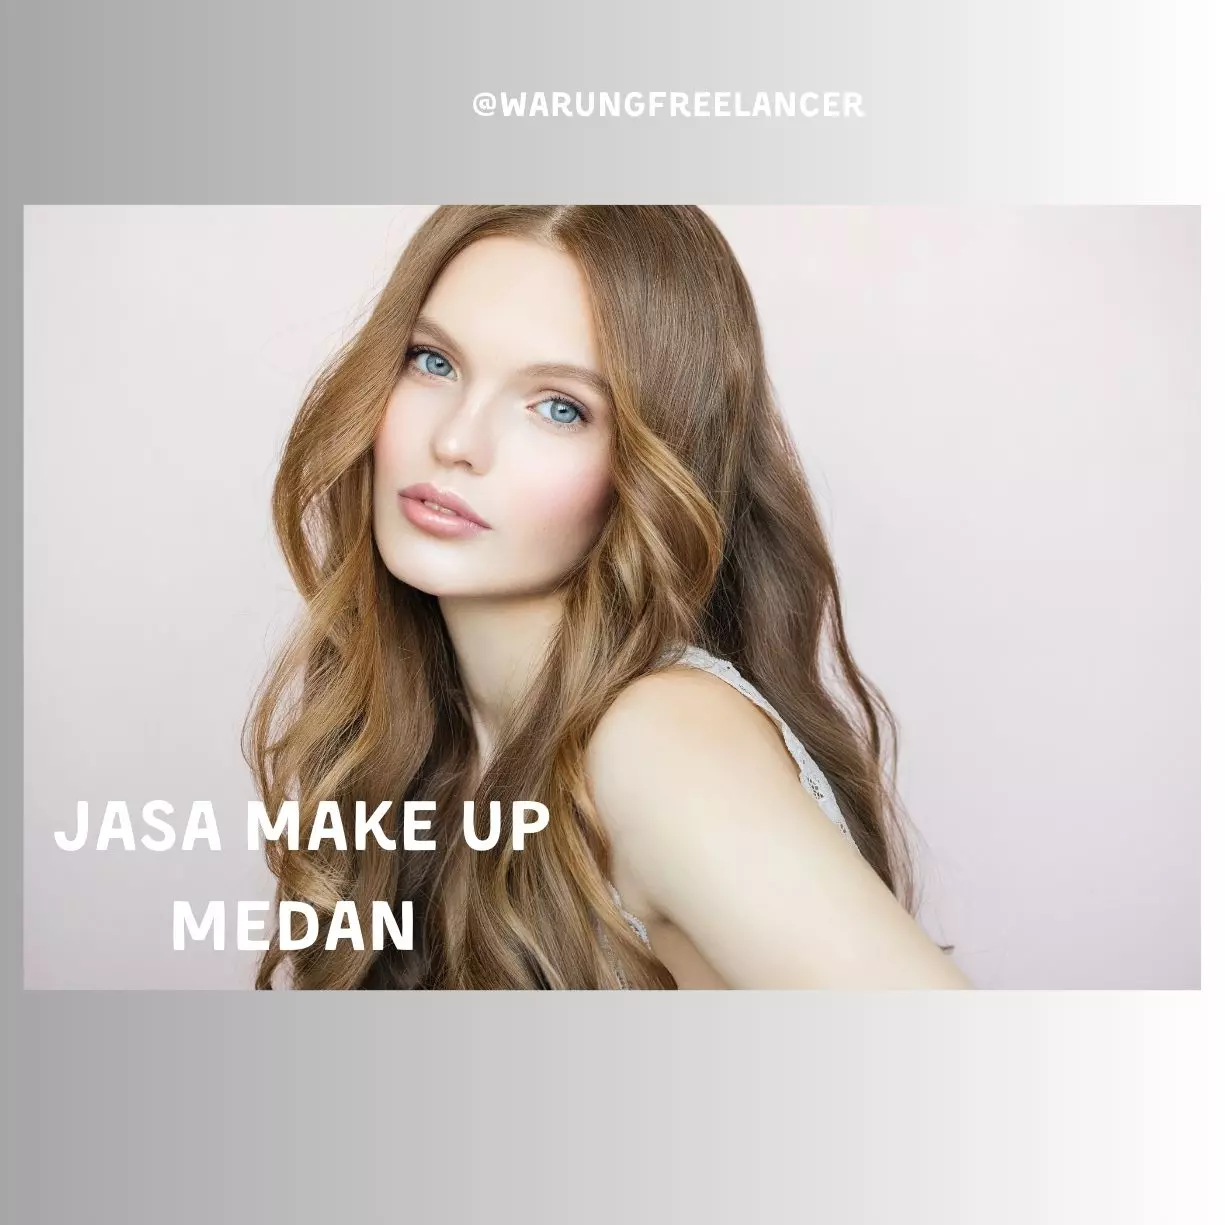 Jasa Make Up Medan